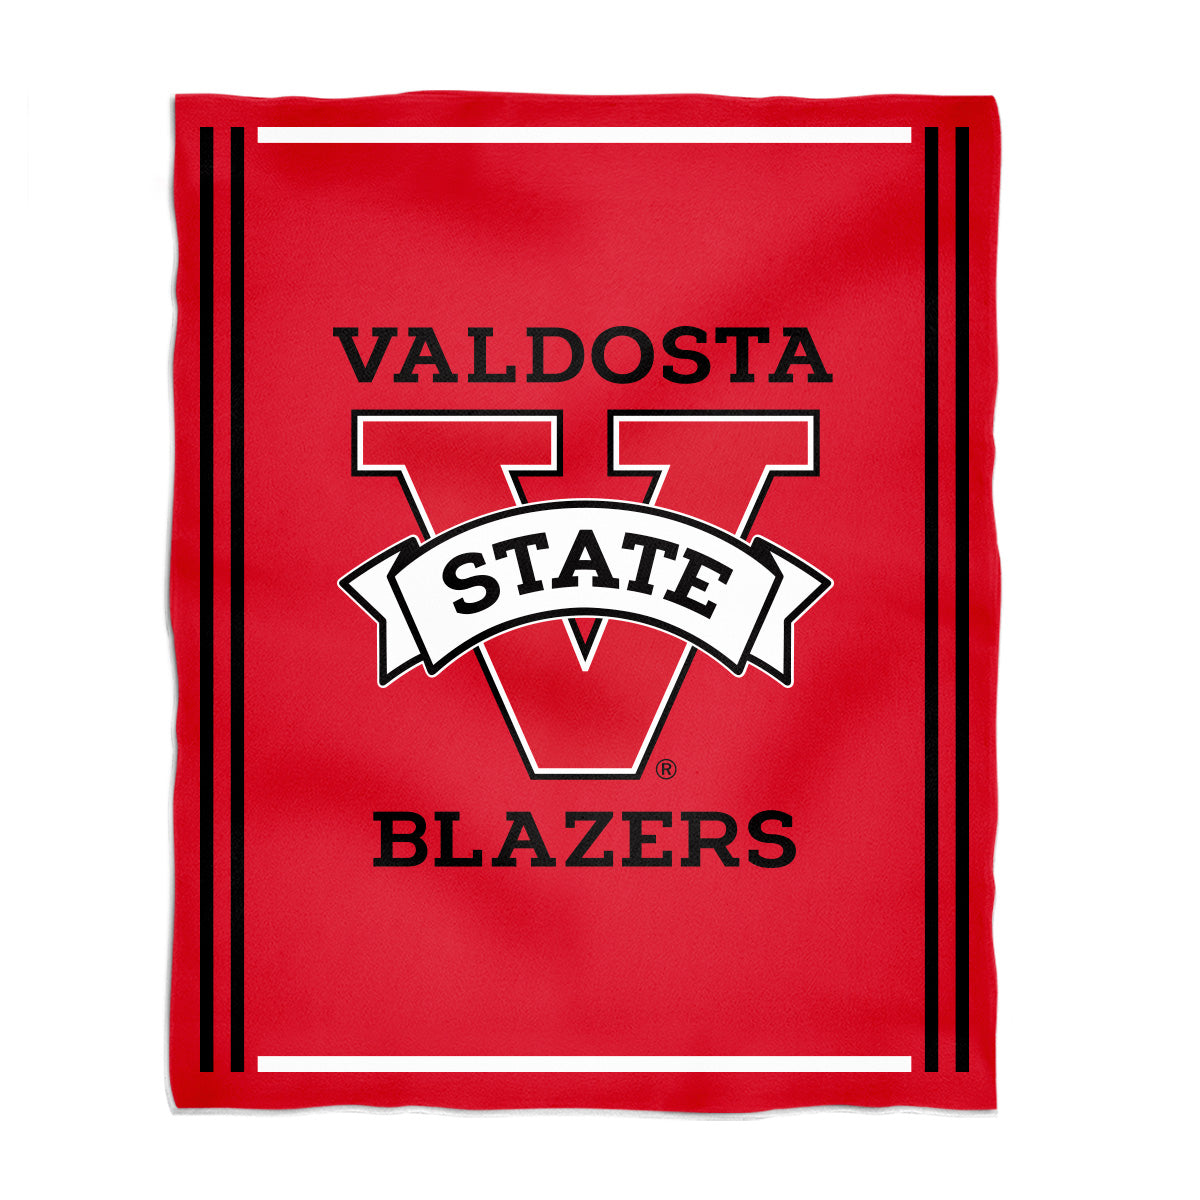 Valdosta Blazers Kids Game Day Red Plush Soft Minky Blanket 36 x 48 Mascot